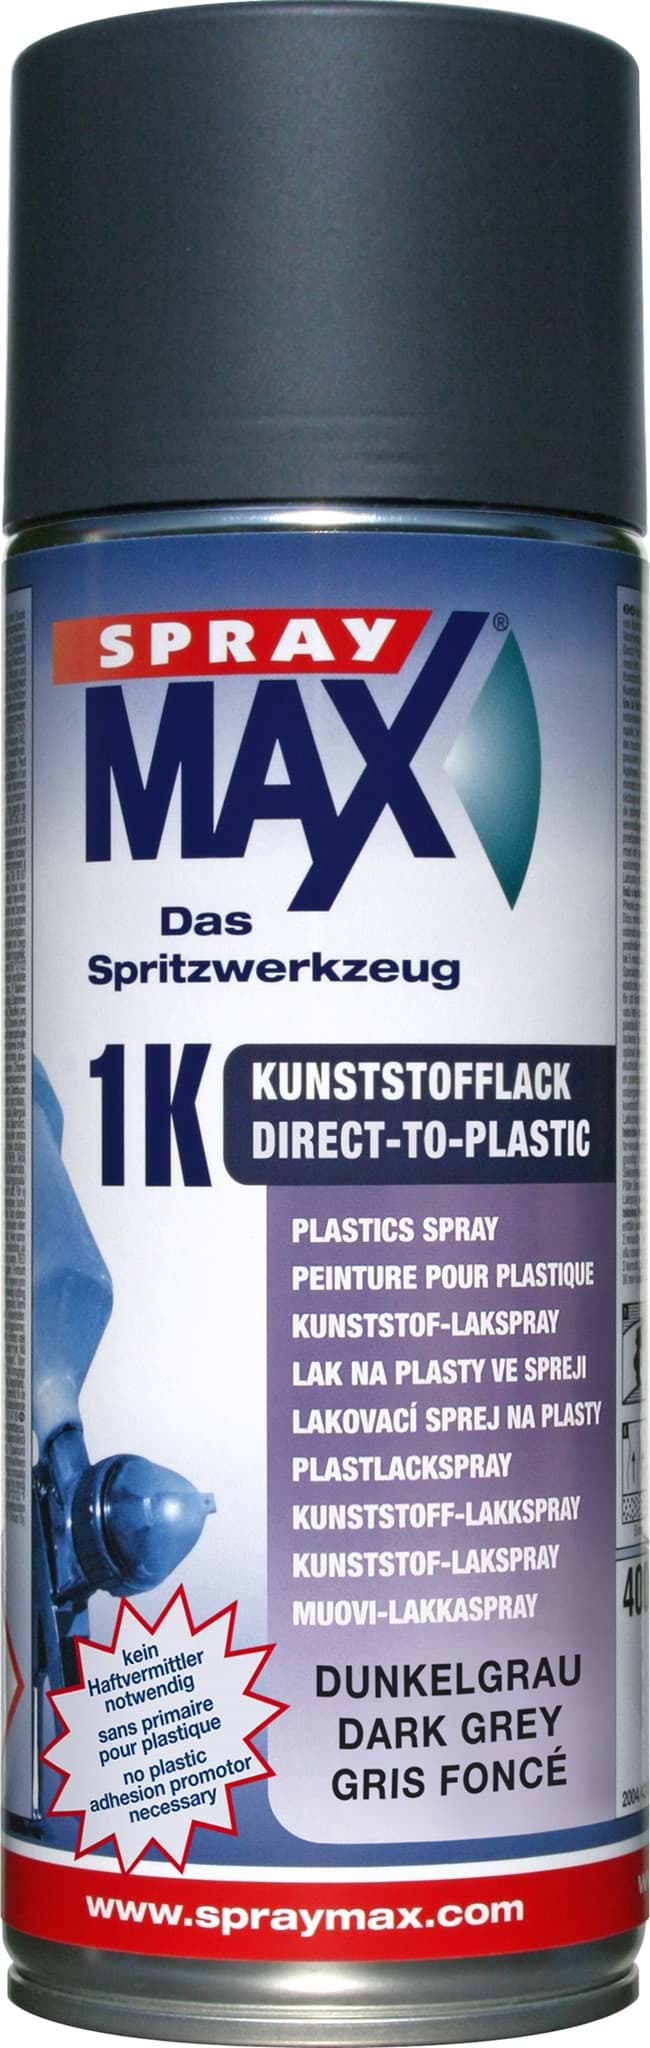 Obraz SprayMax 1K DTP-Kunststofflack Dunkelgrau 400ml 680044